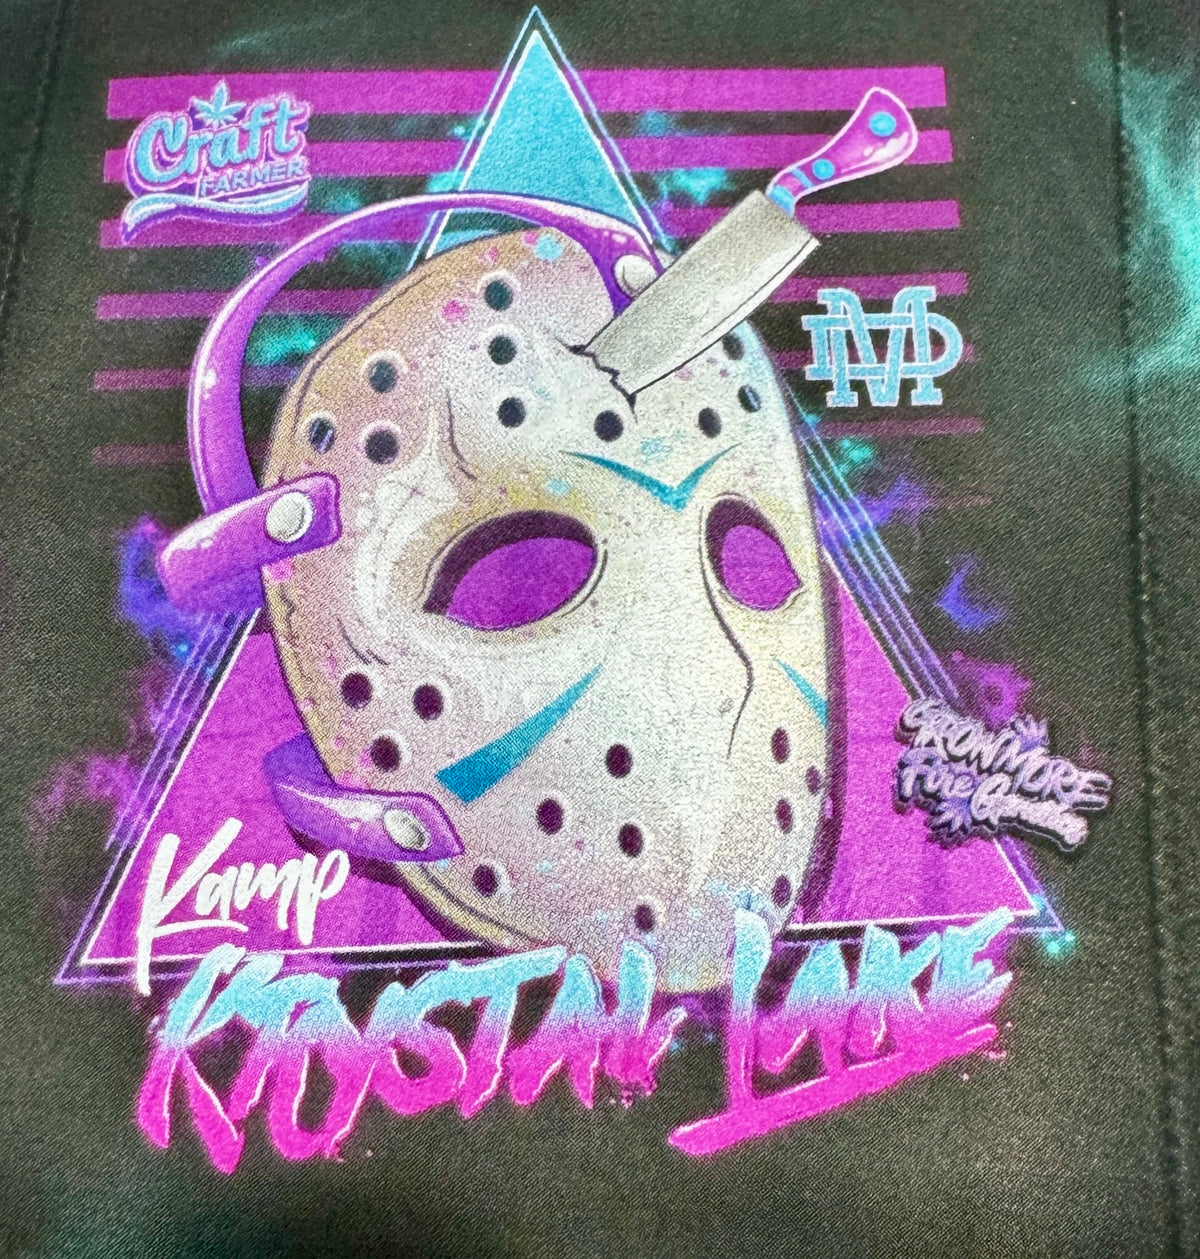 Kamp Krystal Lake Limited Tshirt Pack